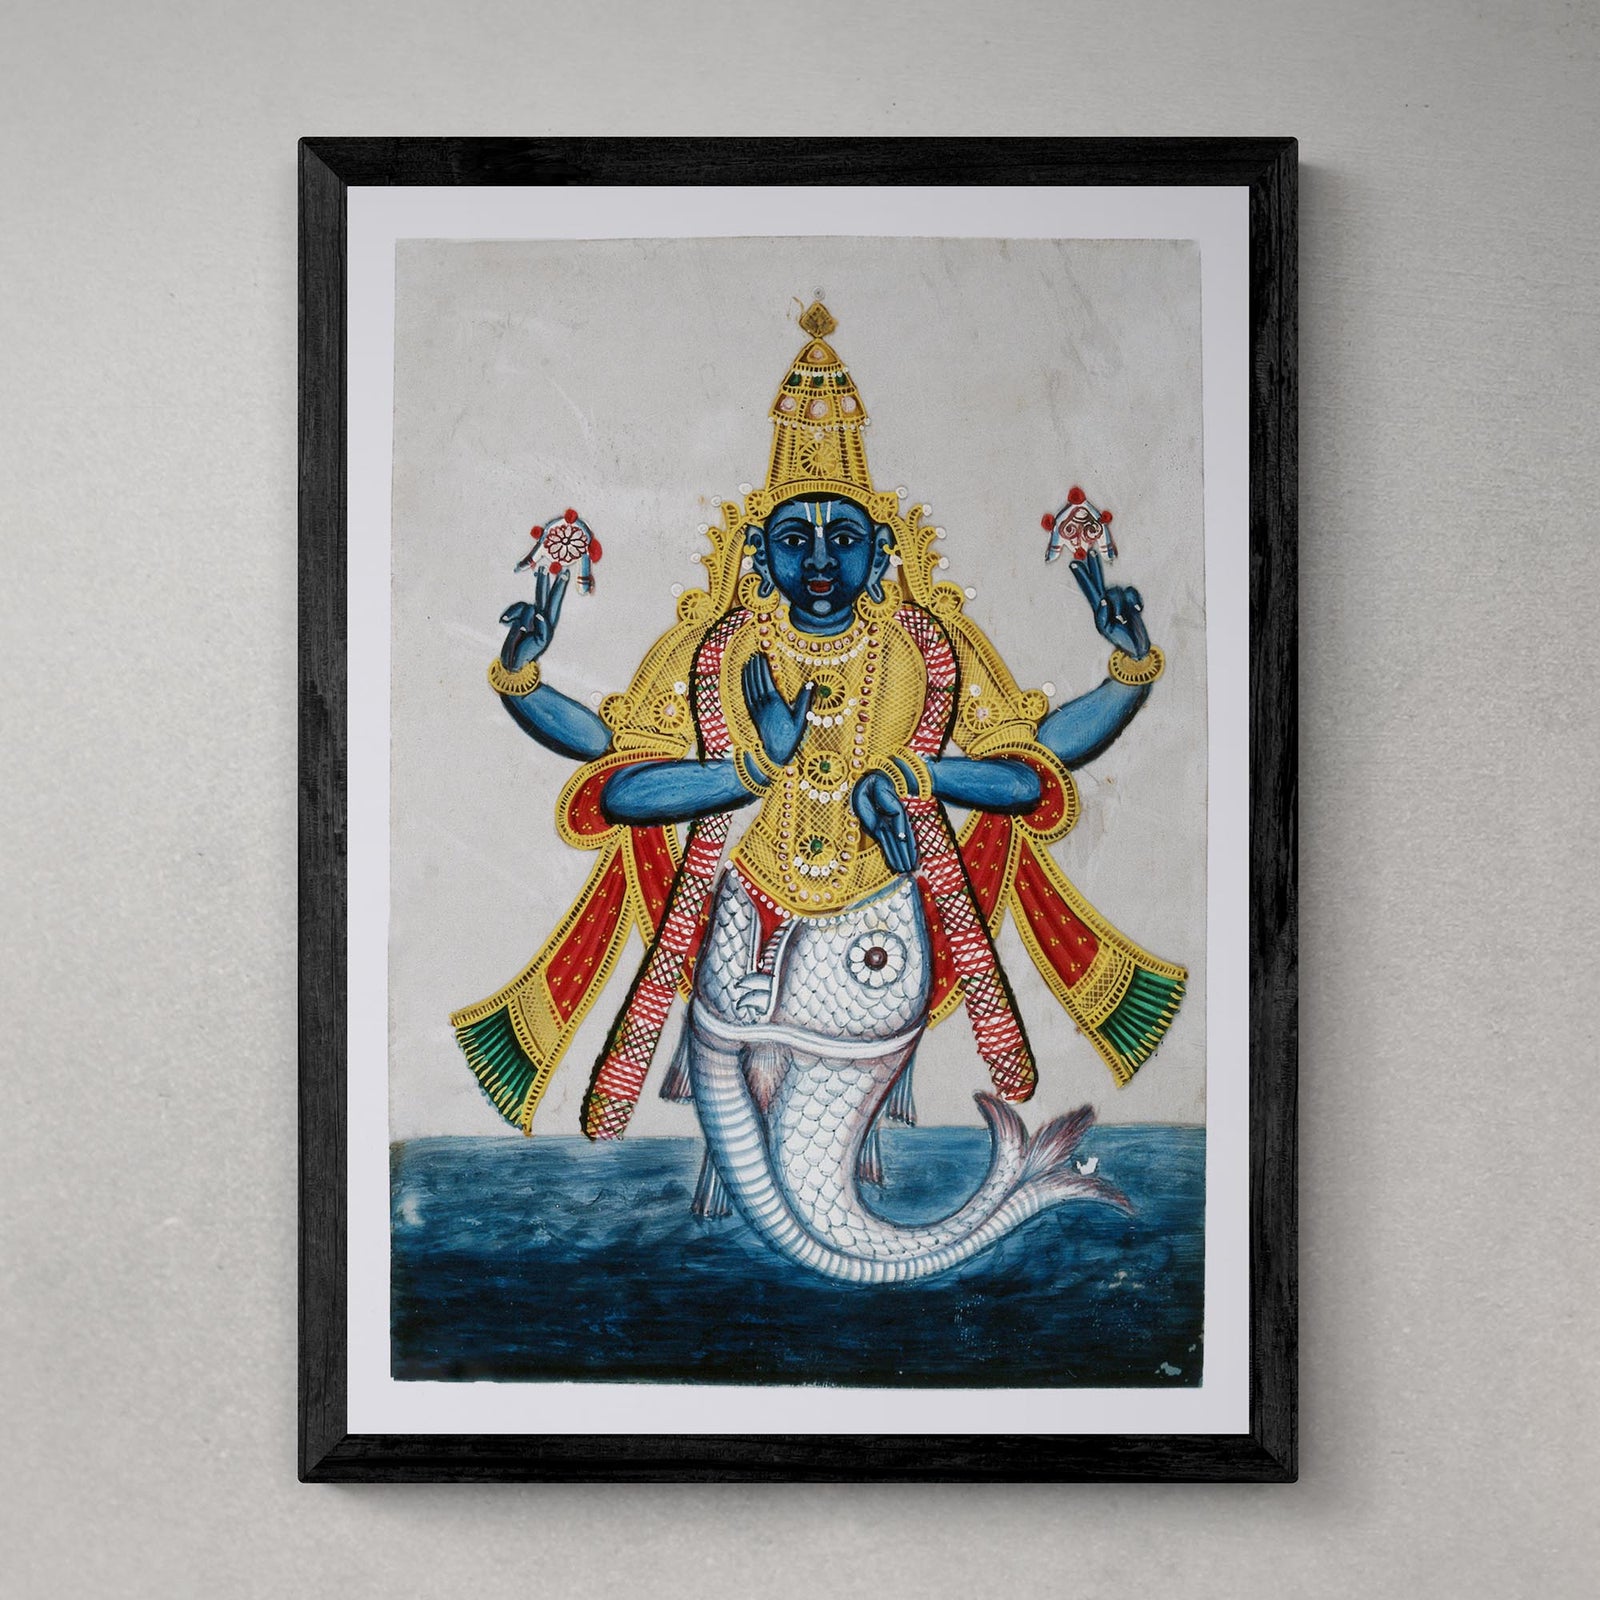 Framed Print 6"x8" / Black Frame Matsya: Vishnu Avatar In the Form of a Fish Hindu Deity Vedic Art Om Antique Yoga Meditation Framed Art Print